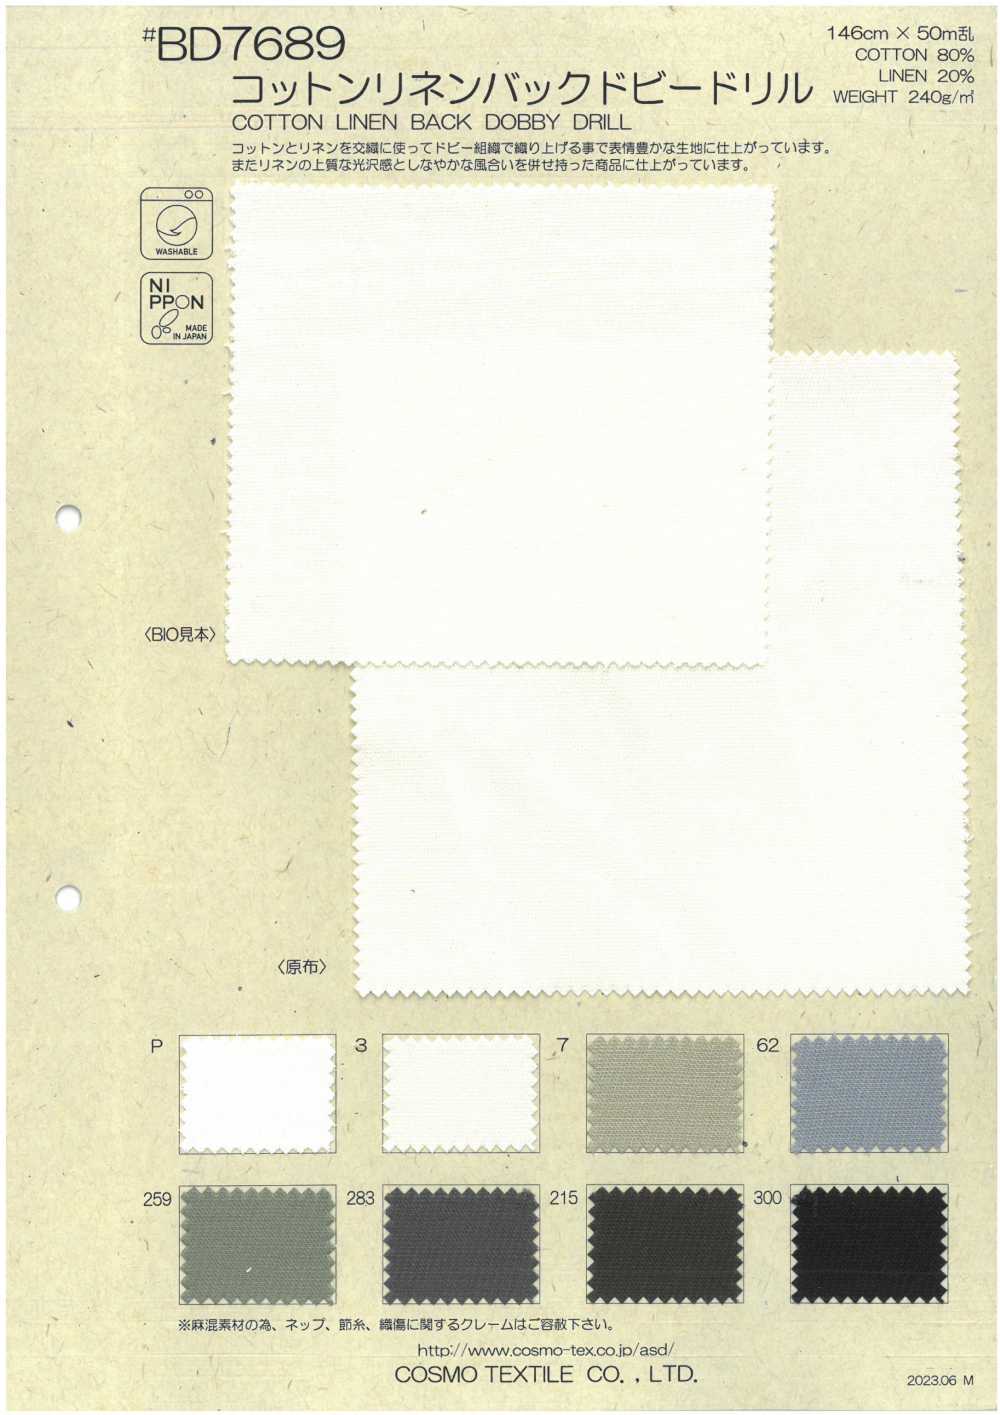 BD7689 Cotton Linen Back Dobby Drill[Textile / Fabric] COSMO TEXTILE